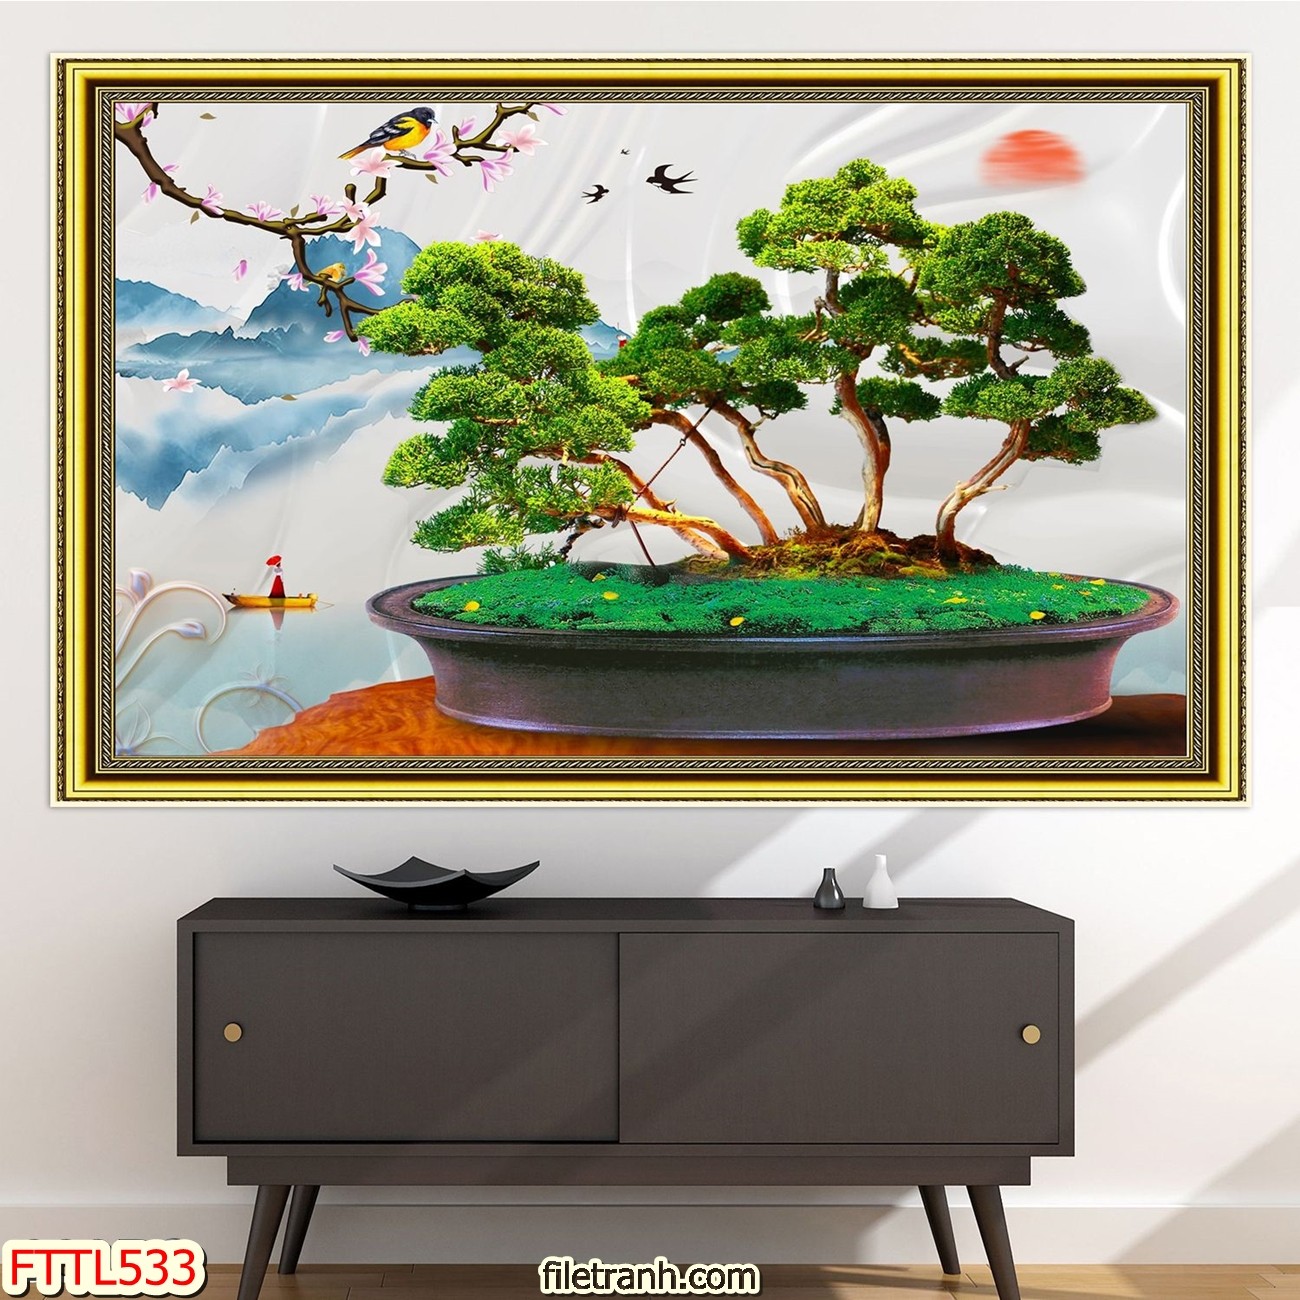 https://filetranh.com/file-tranh-chau-mai-bonsai/file-tranh-chau-mai-bonsai-fttl533.html